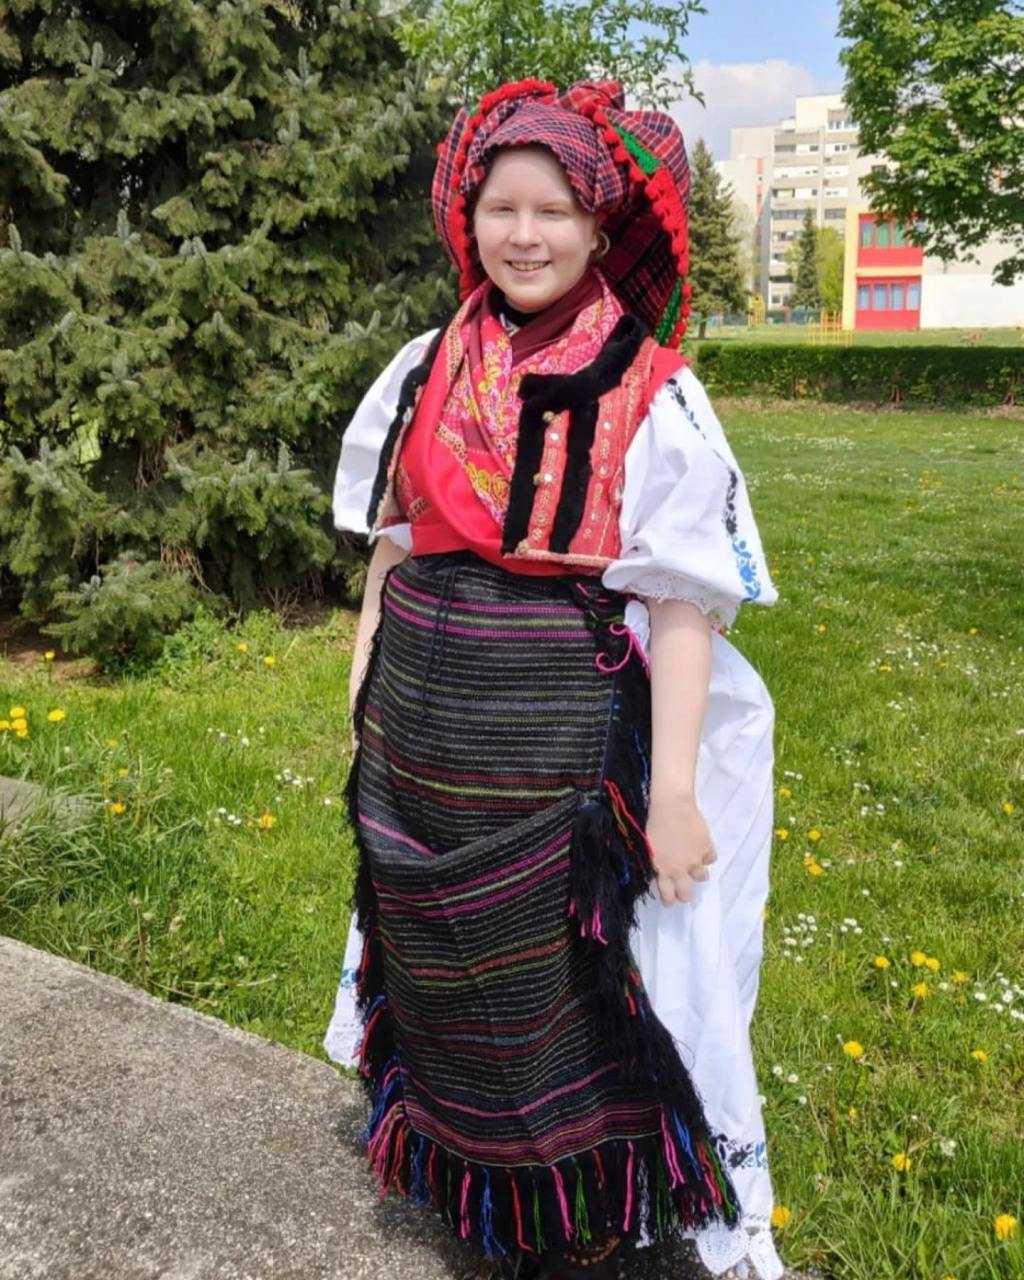 Andrea viste traje típico croata